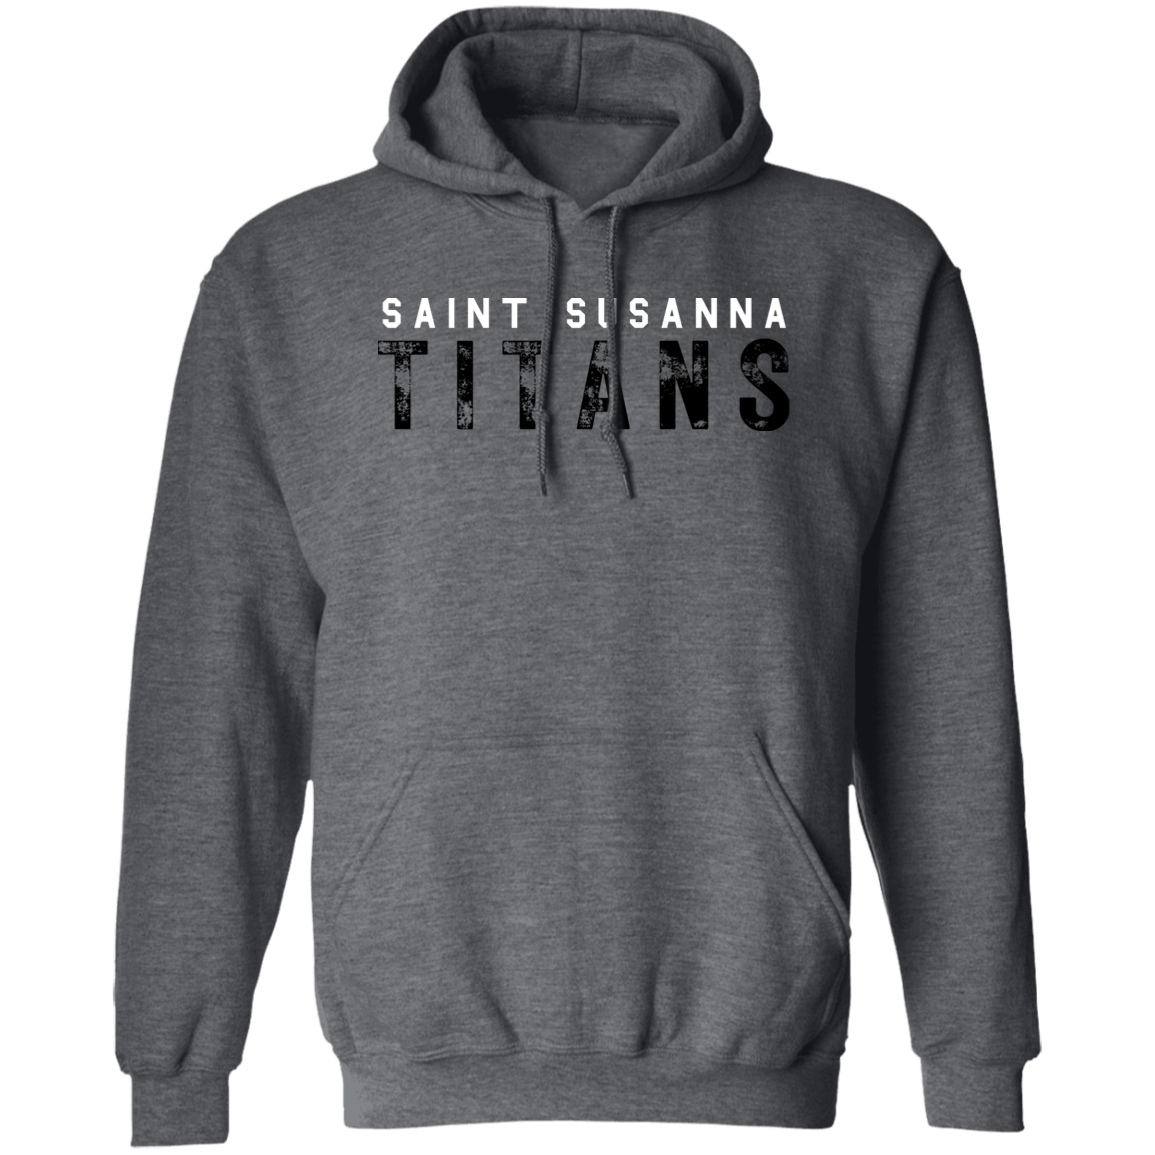 St. Susanna TITANS (Black/White print) Pullover Hoodie